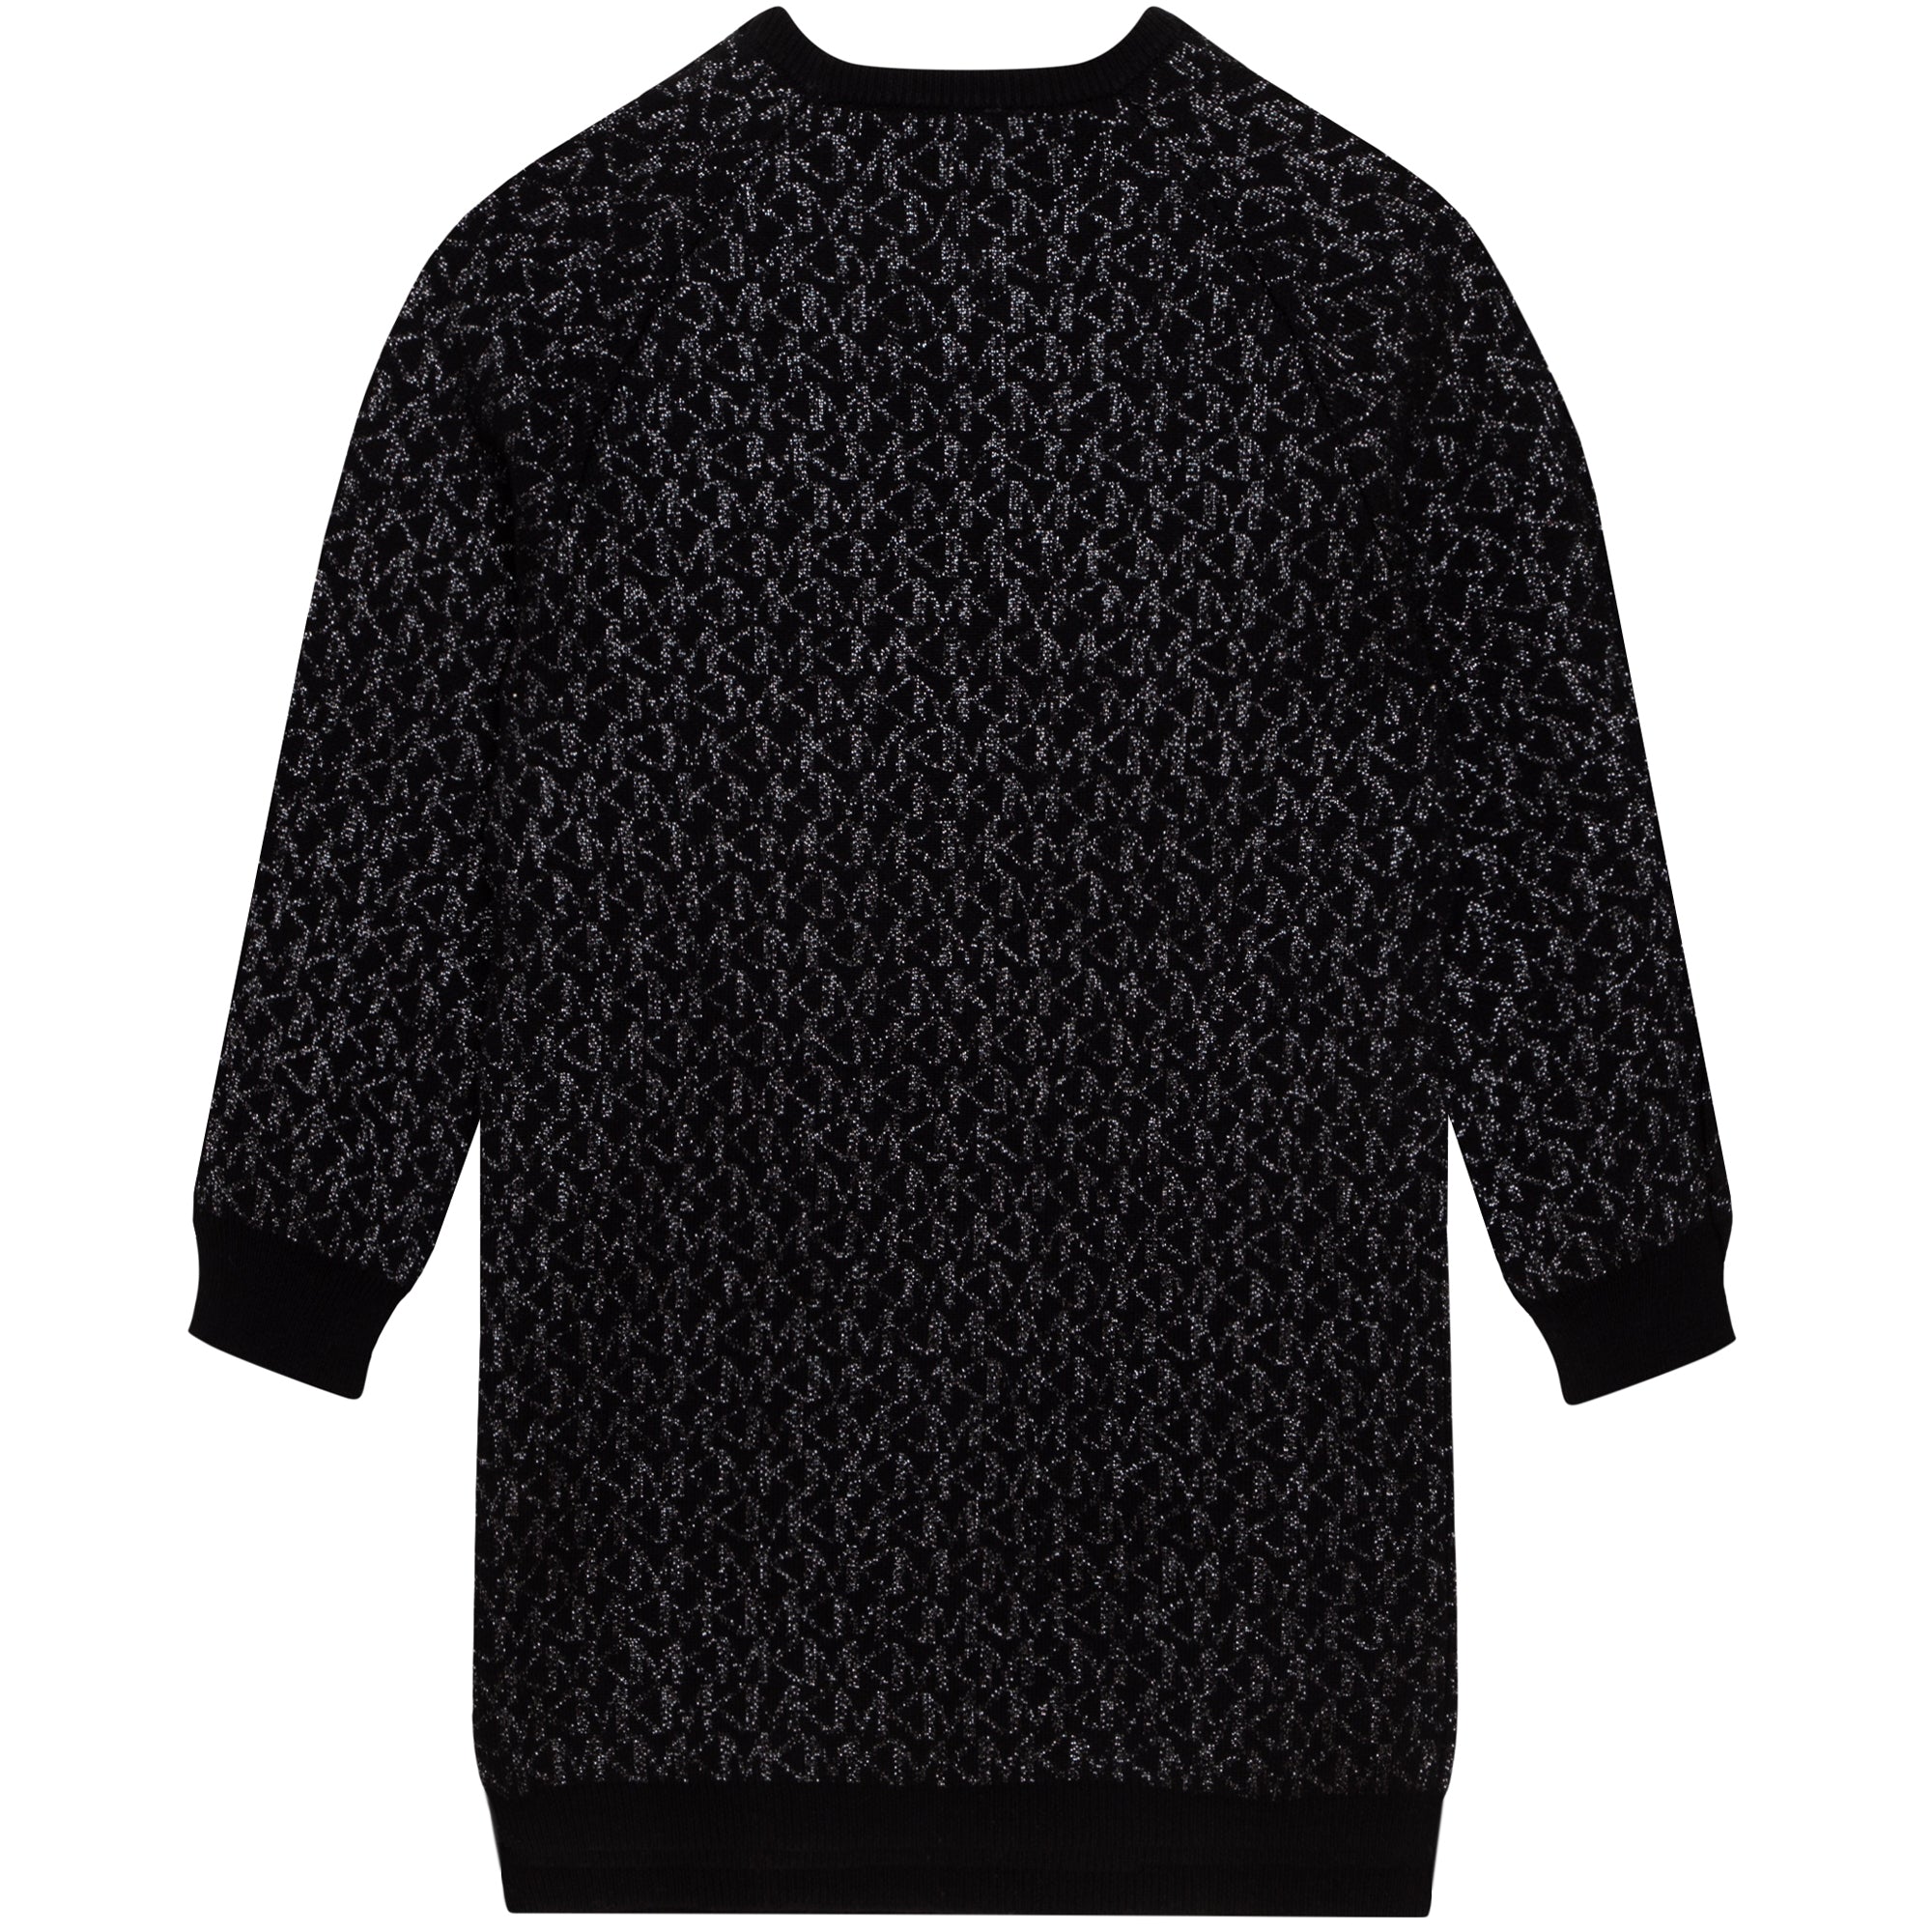 Michael Kors Black Knit Dress